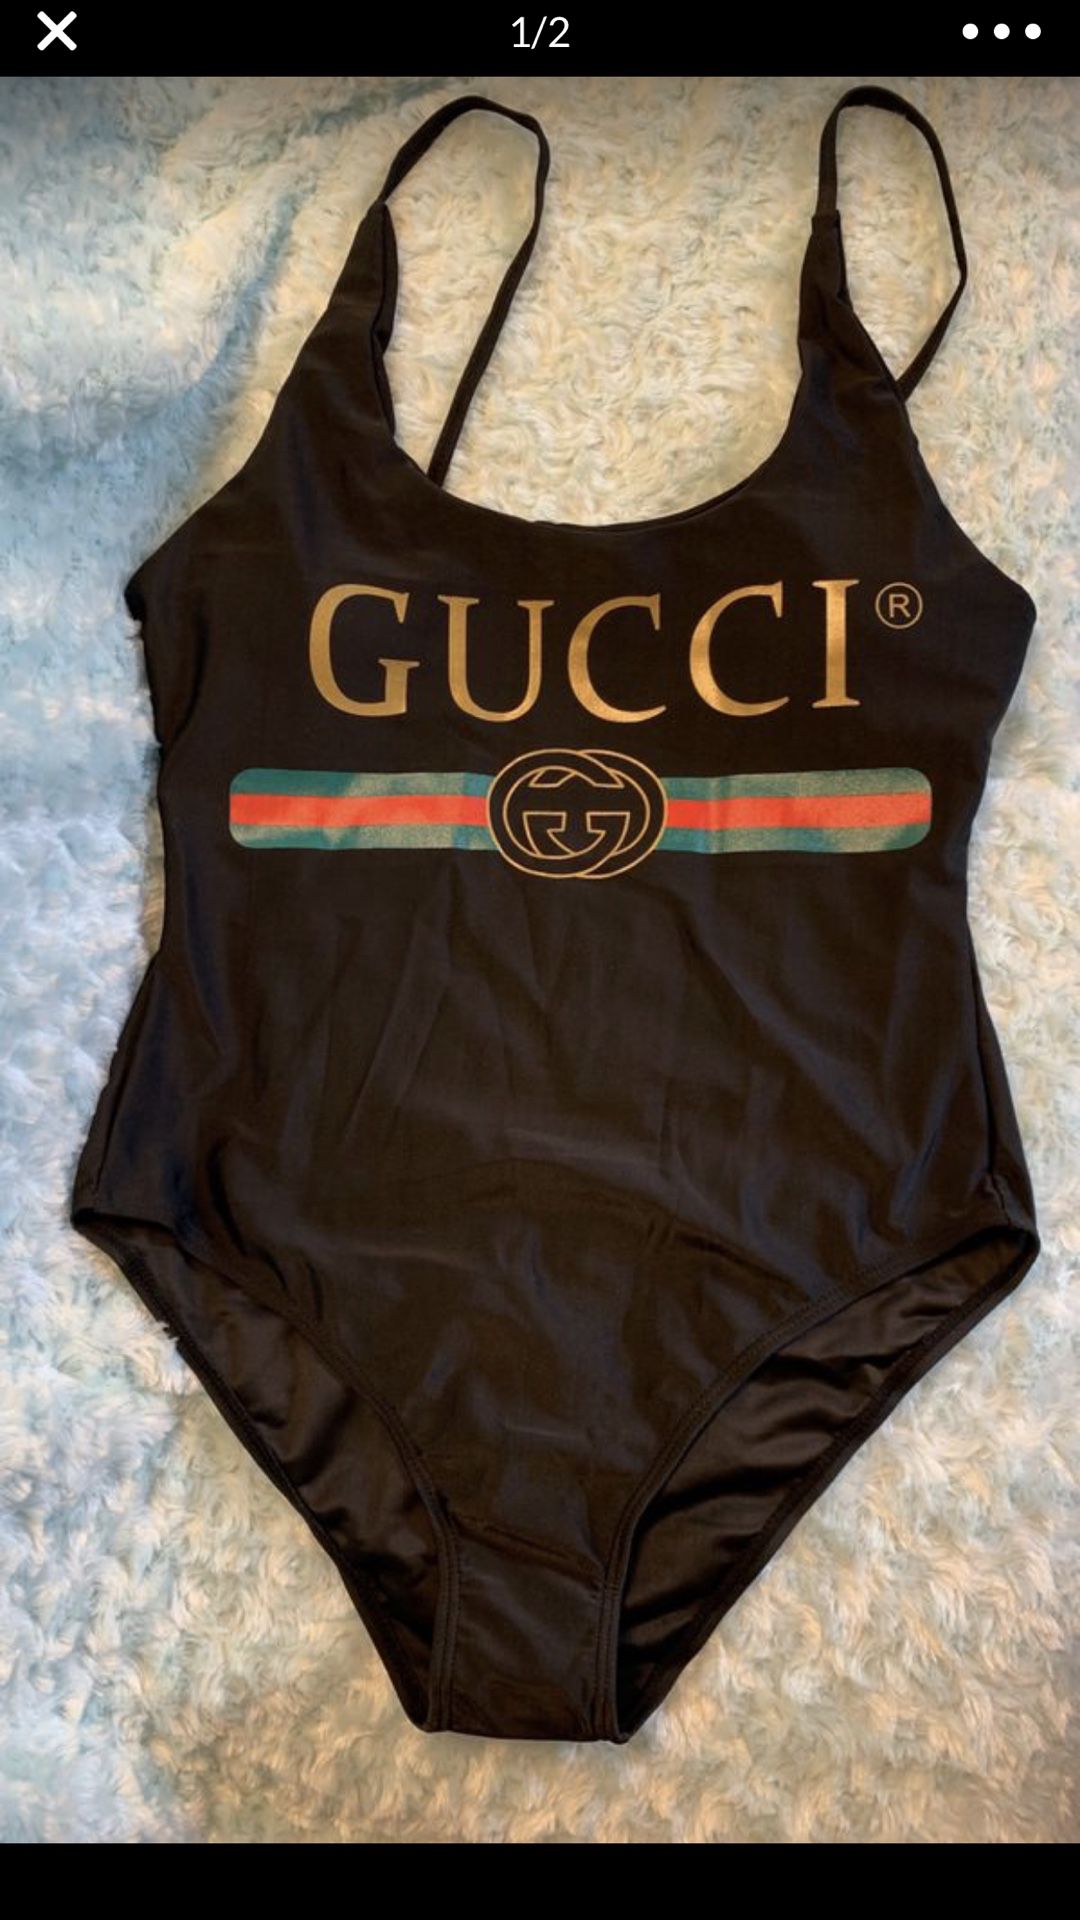 Gucci bathing suit for Sale in Phoenix, AZ - OfferUp